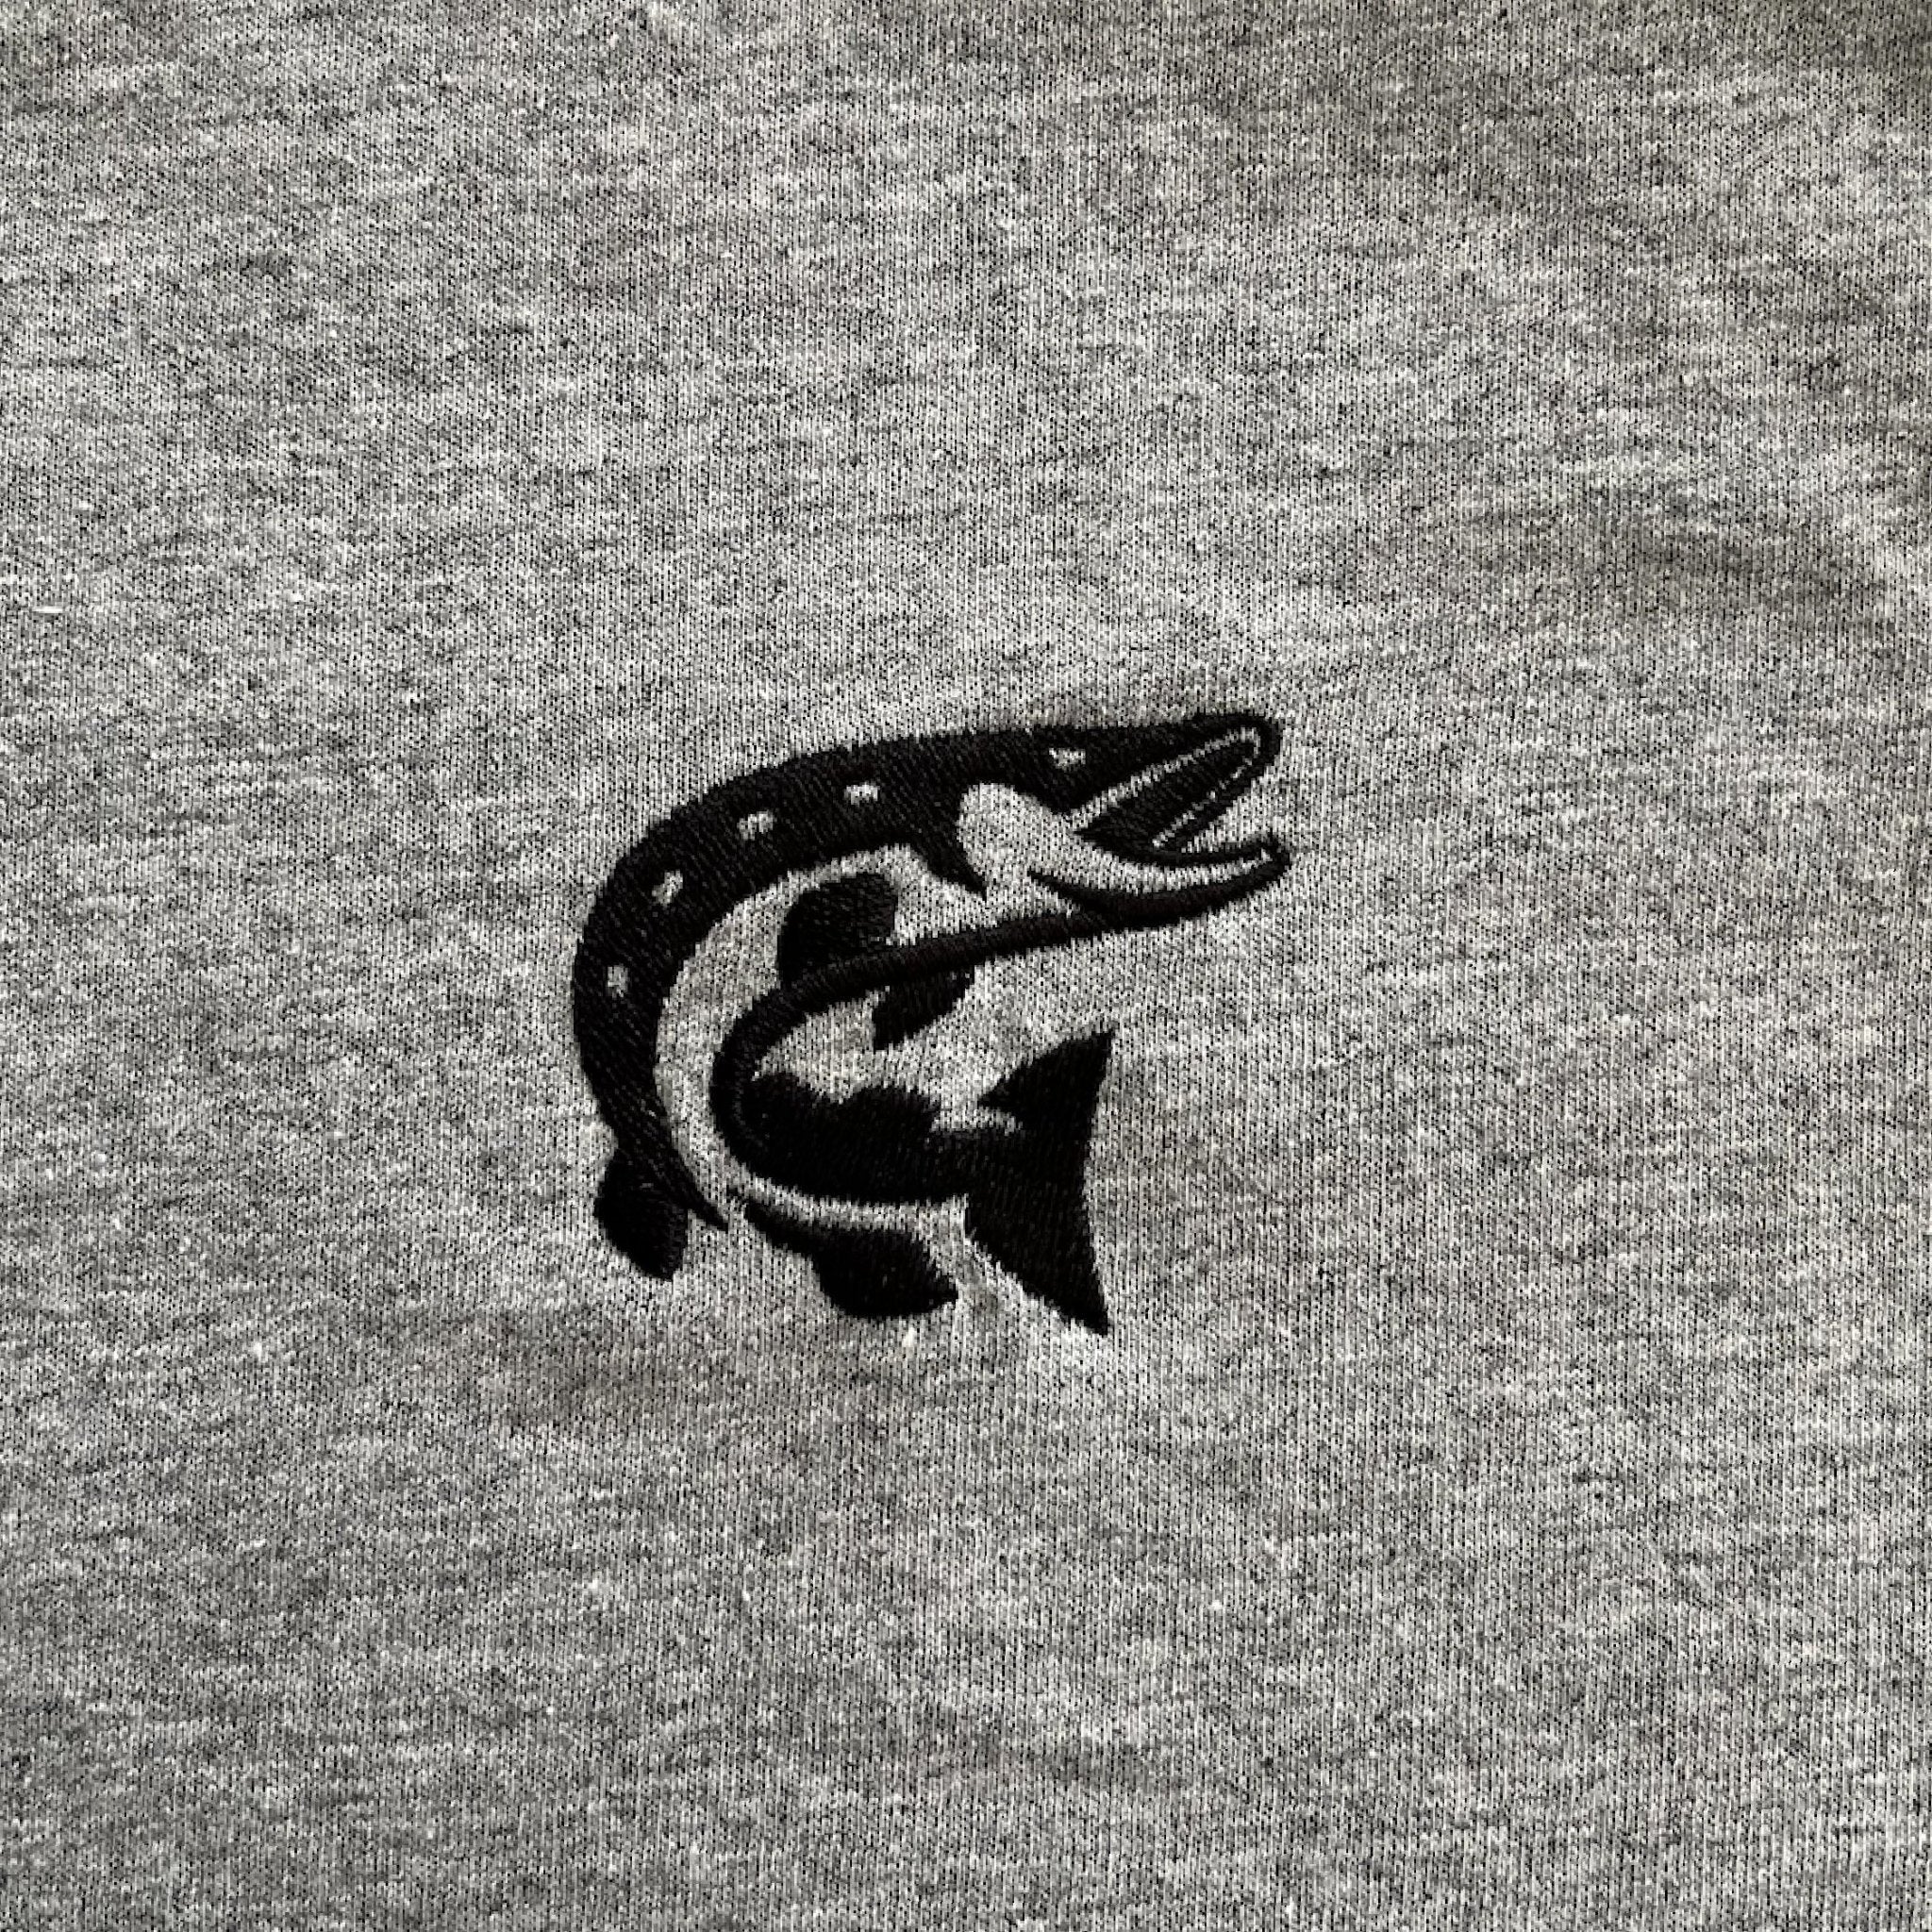 Left Swoosh Pike T-shirt - Oddhook